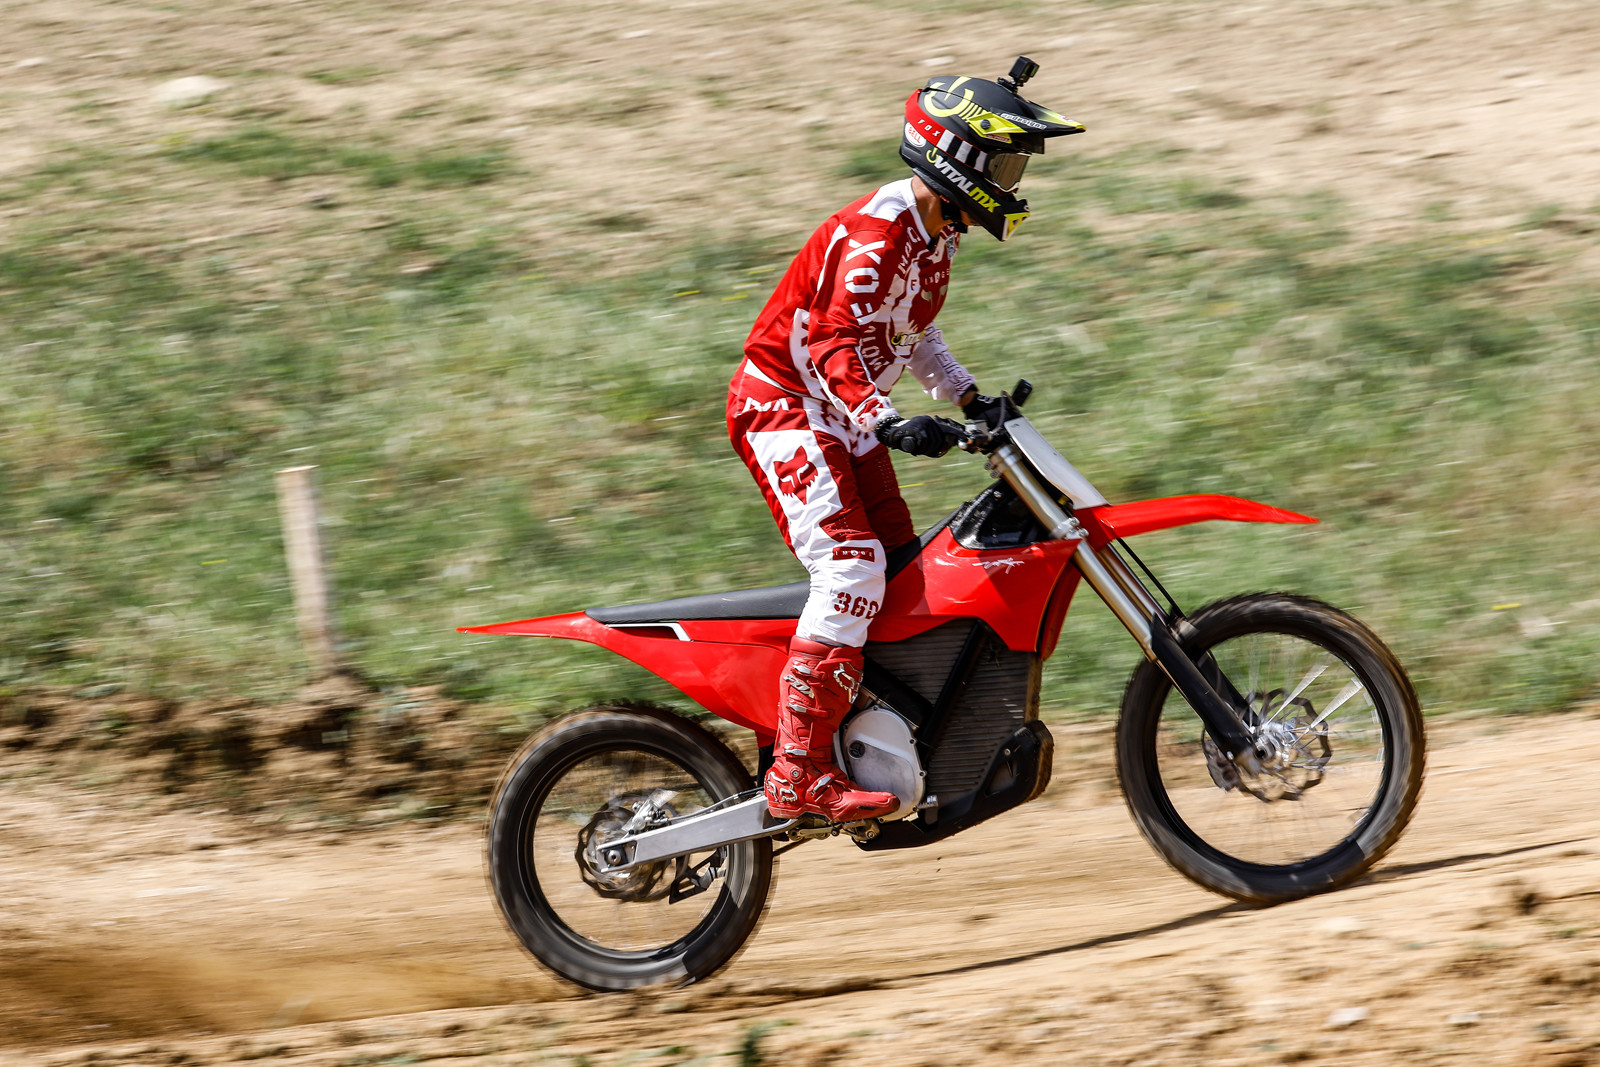 Vídeo Motocross: Stark Varg, a moto elétrica revolucionária? - Offroadmoto